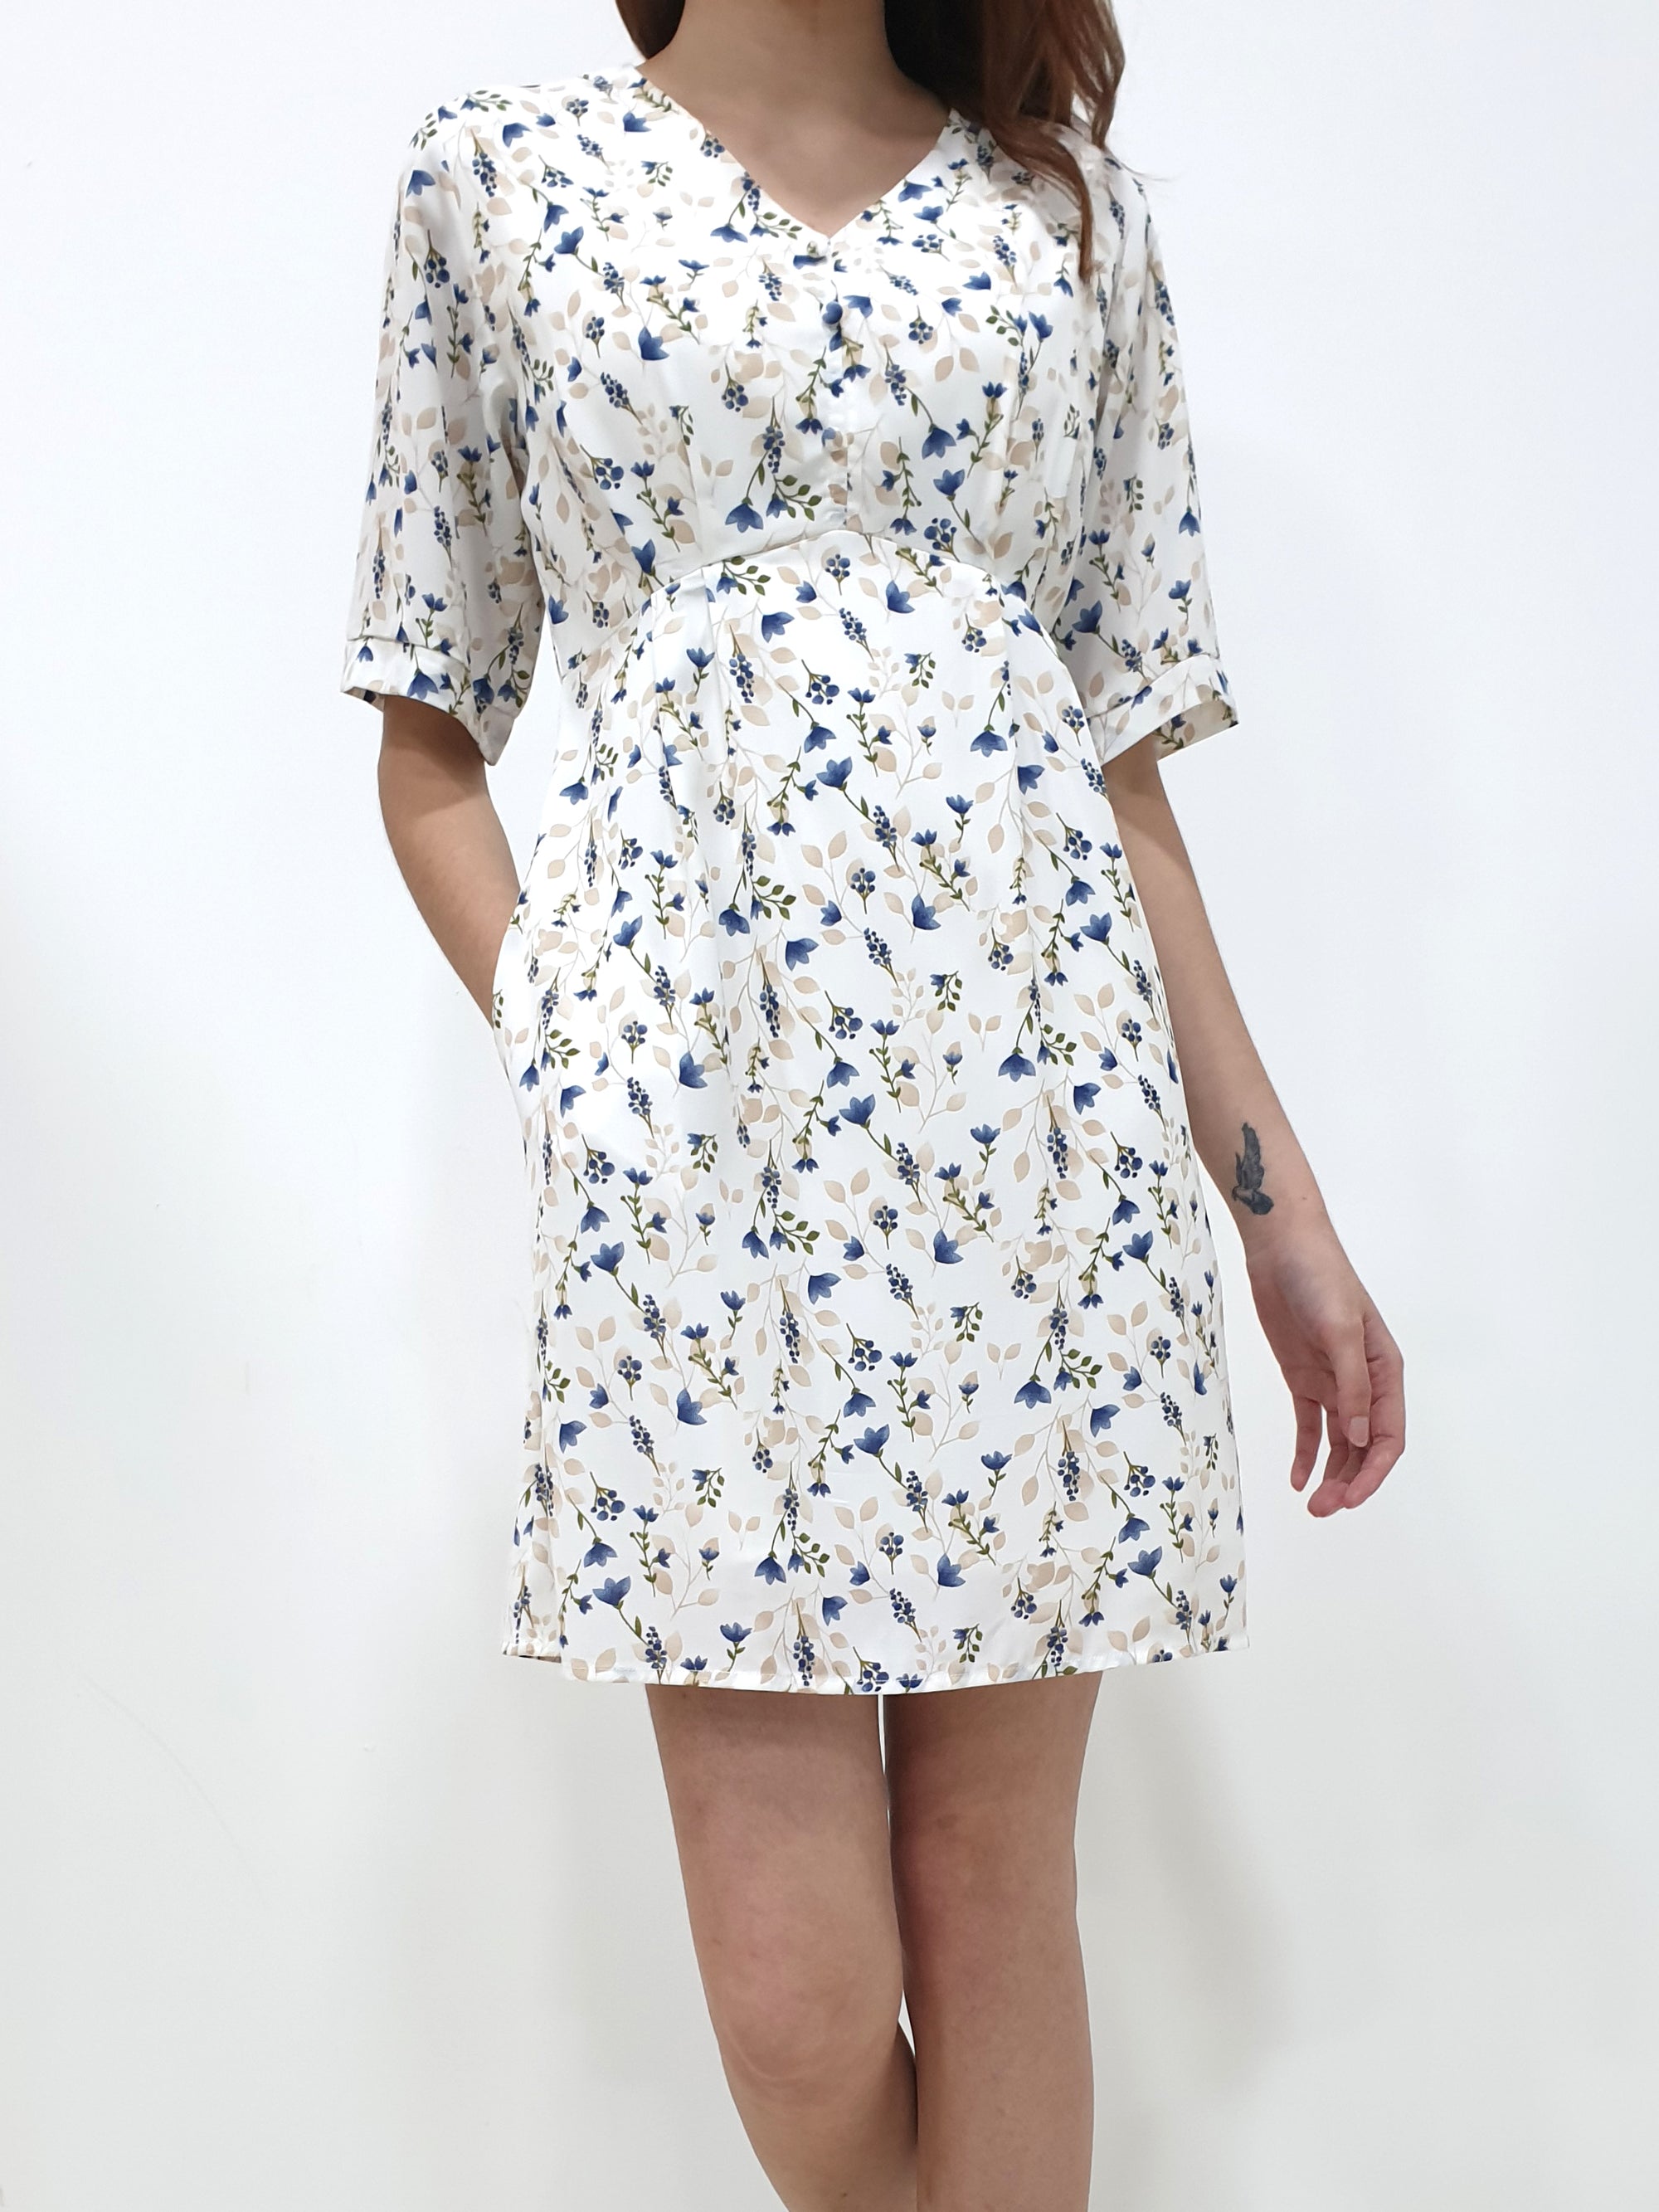 Tulip Print Dress - White (Non-returnable) - Ferlicious